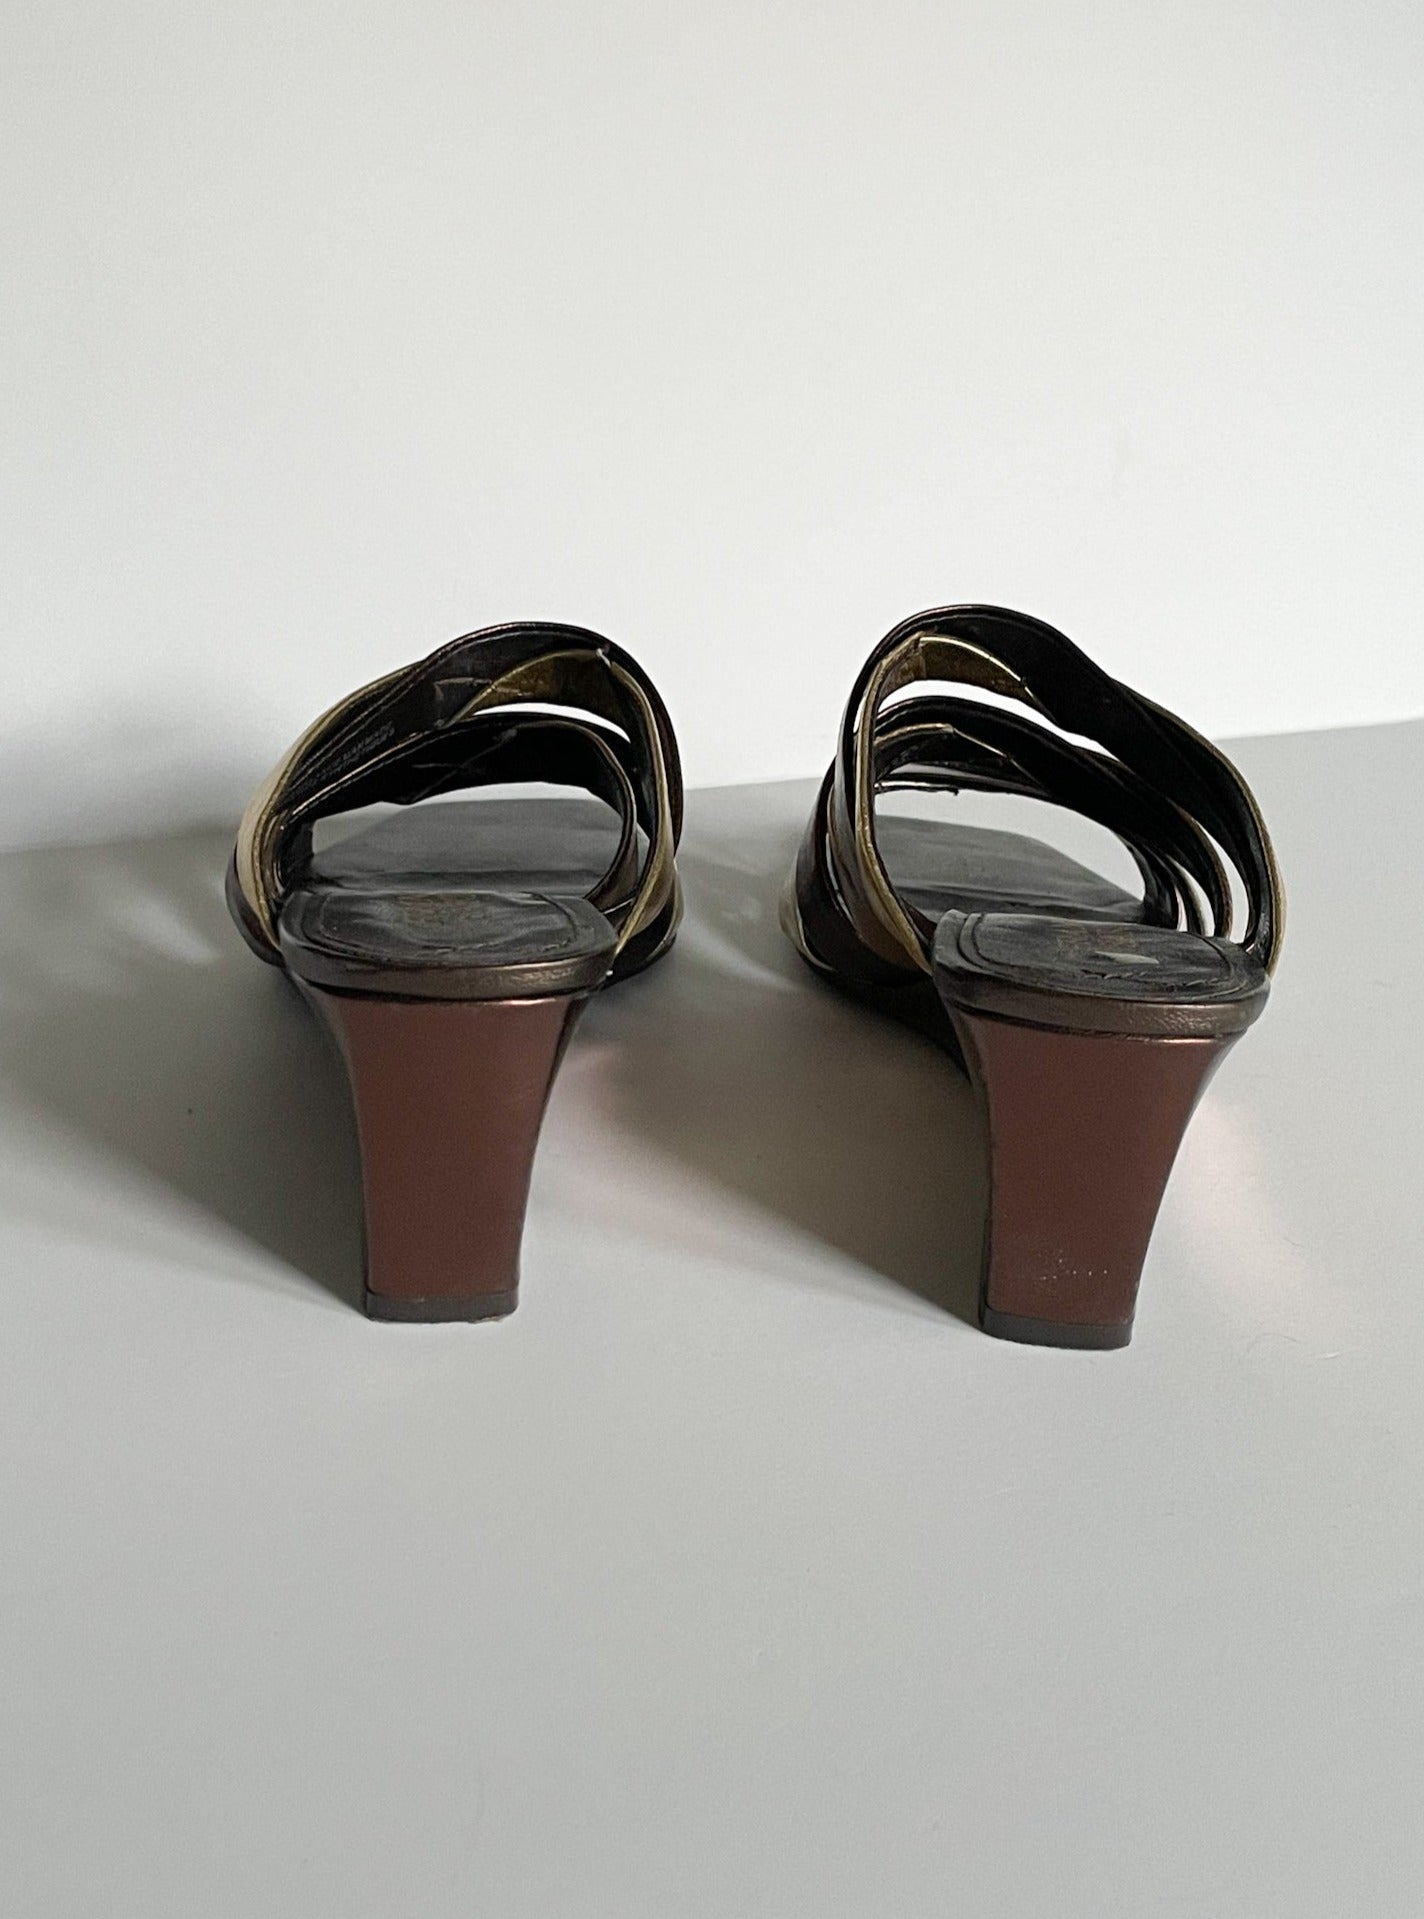 Franco Sarto Leather Bronze Silver Gold Strap Square Toe Wedge Heel Sandals - Size 6.5